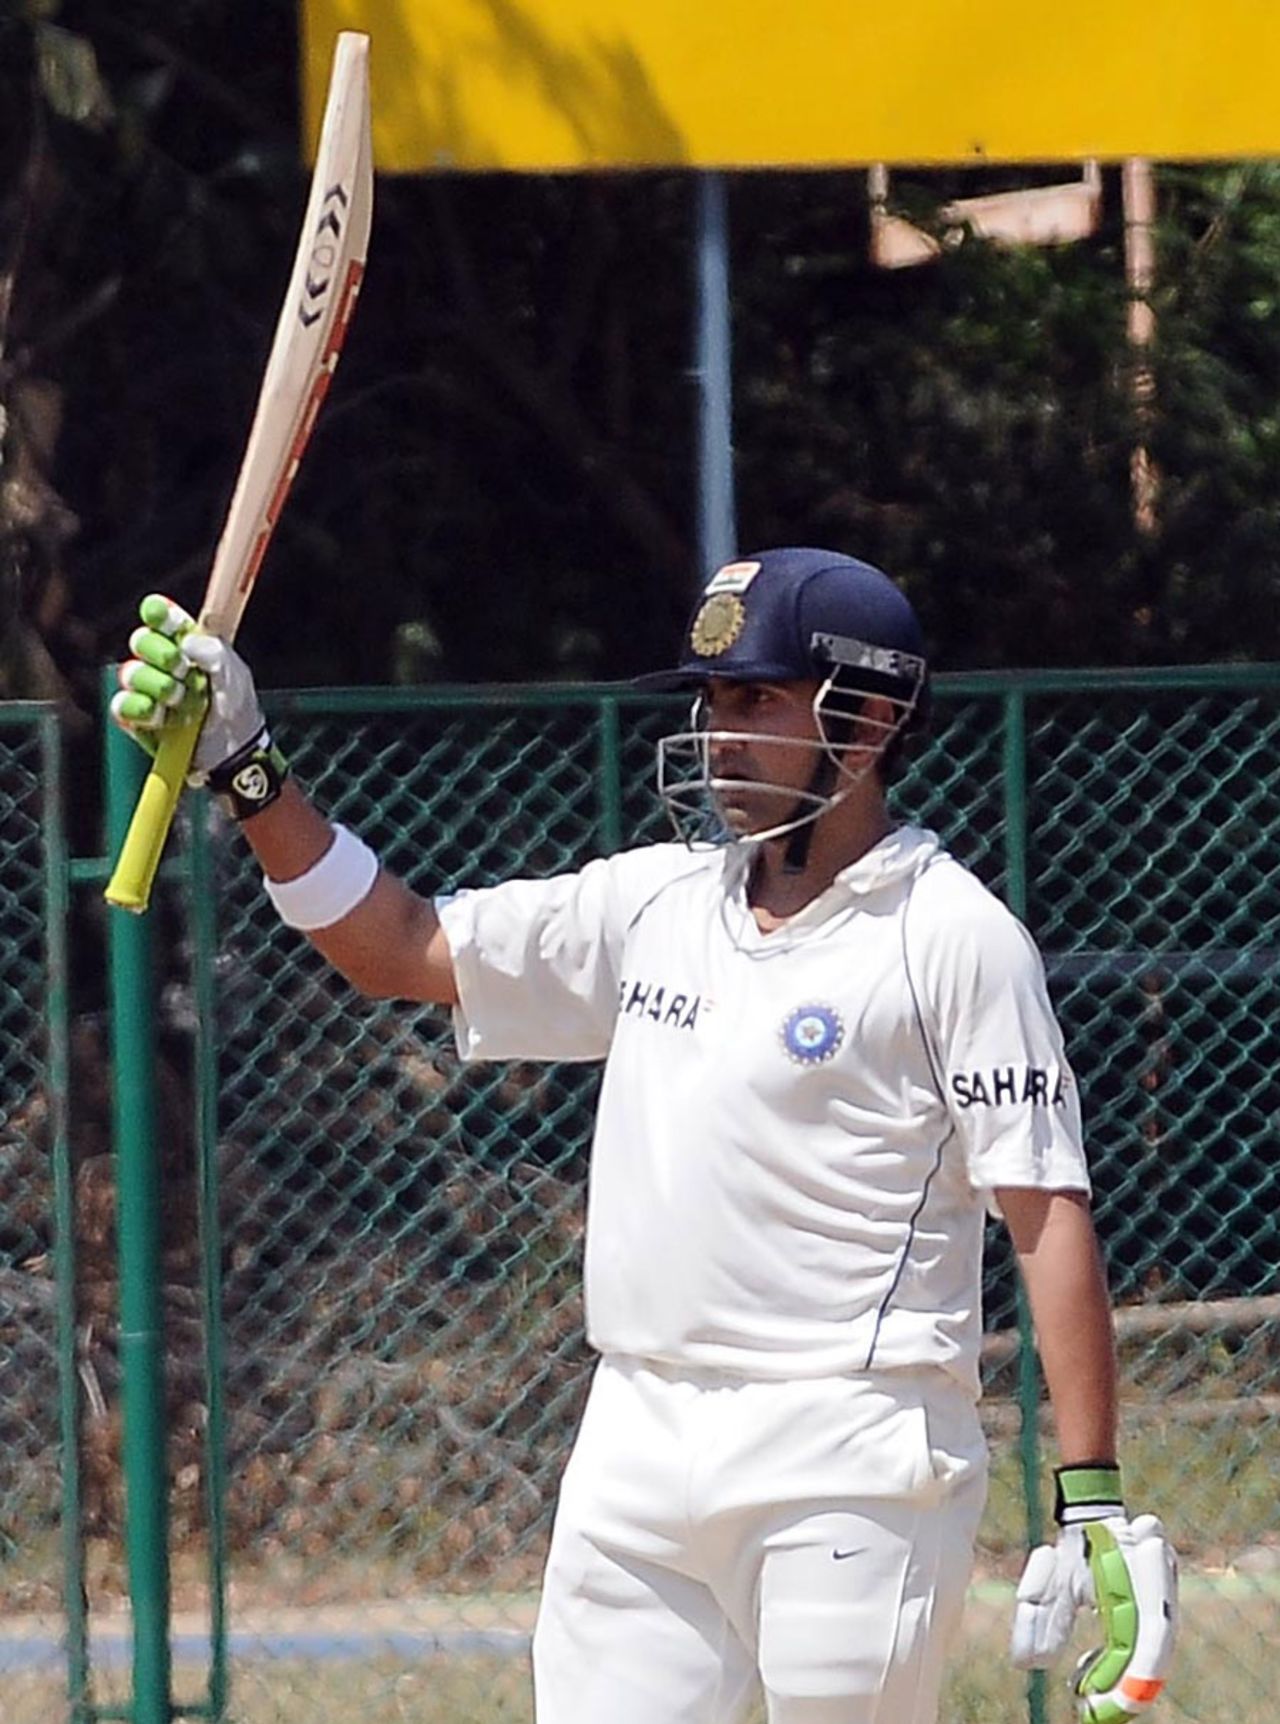 Gautam Gambhir scored 112 runs against the Australians, India A v Australians, Tour game, Day 1, Chennai, February 16 2013